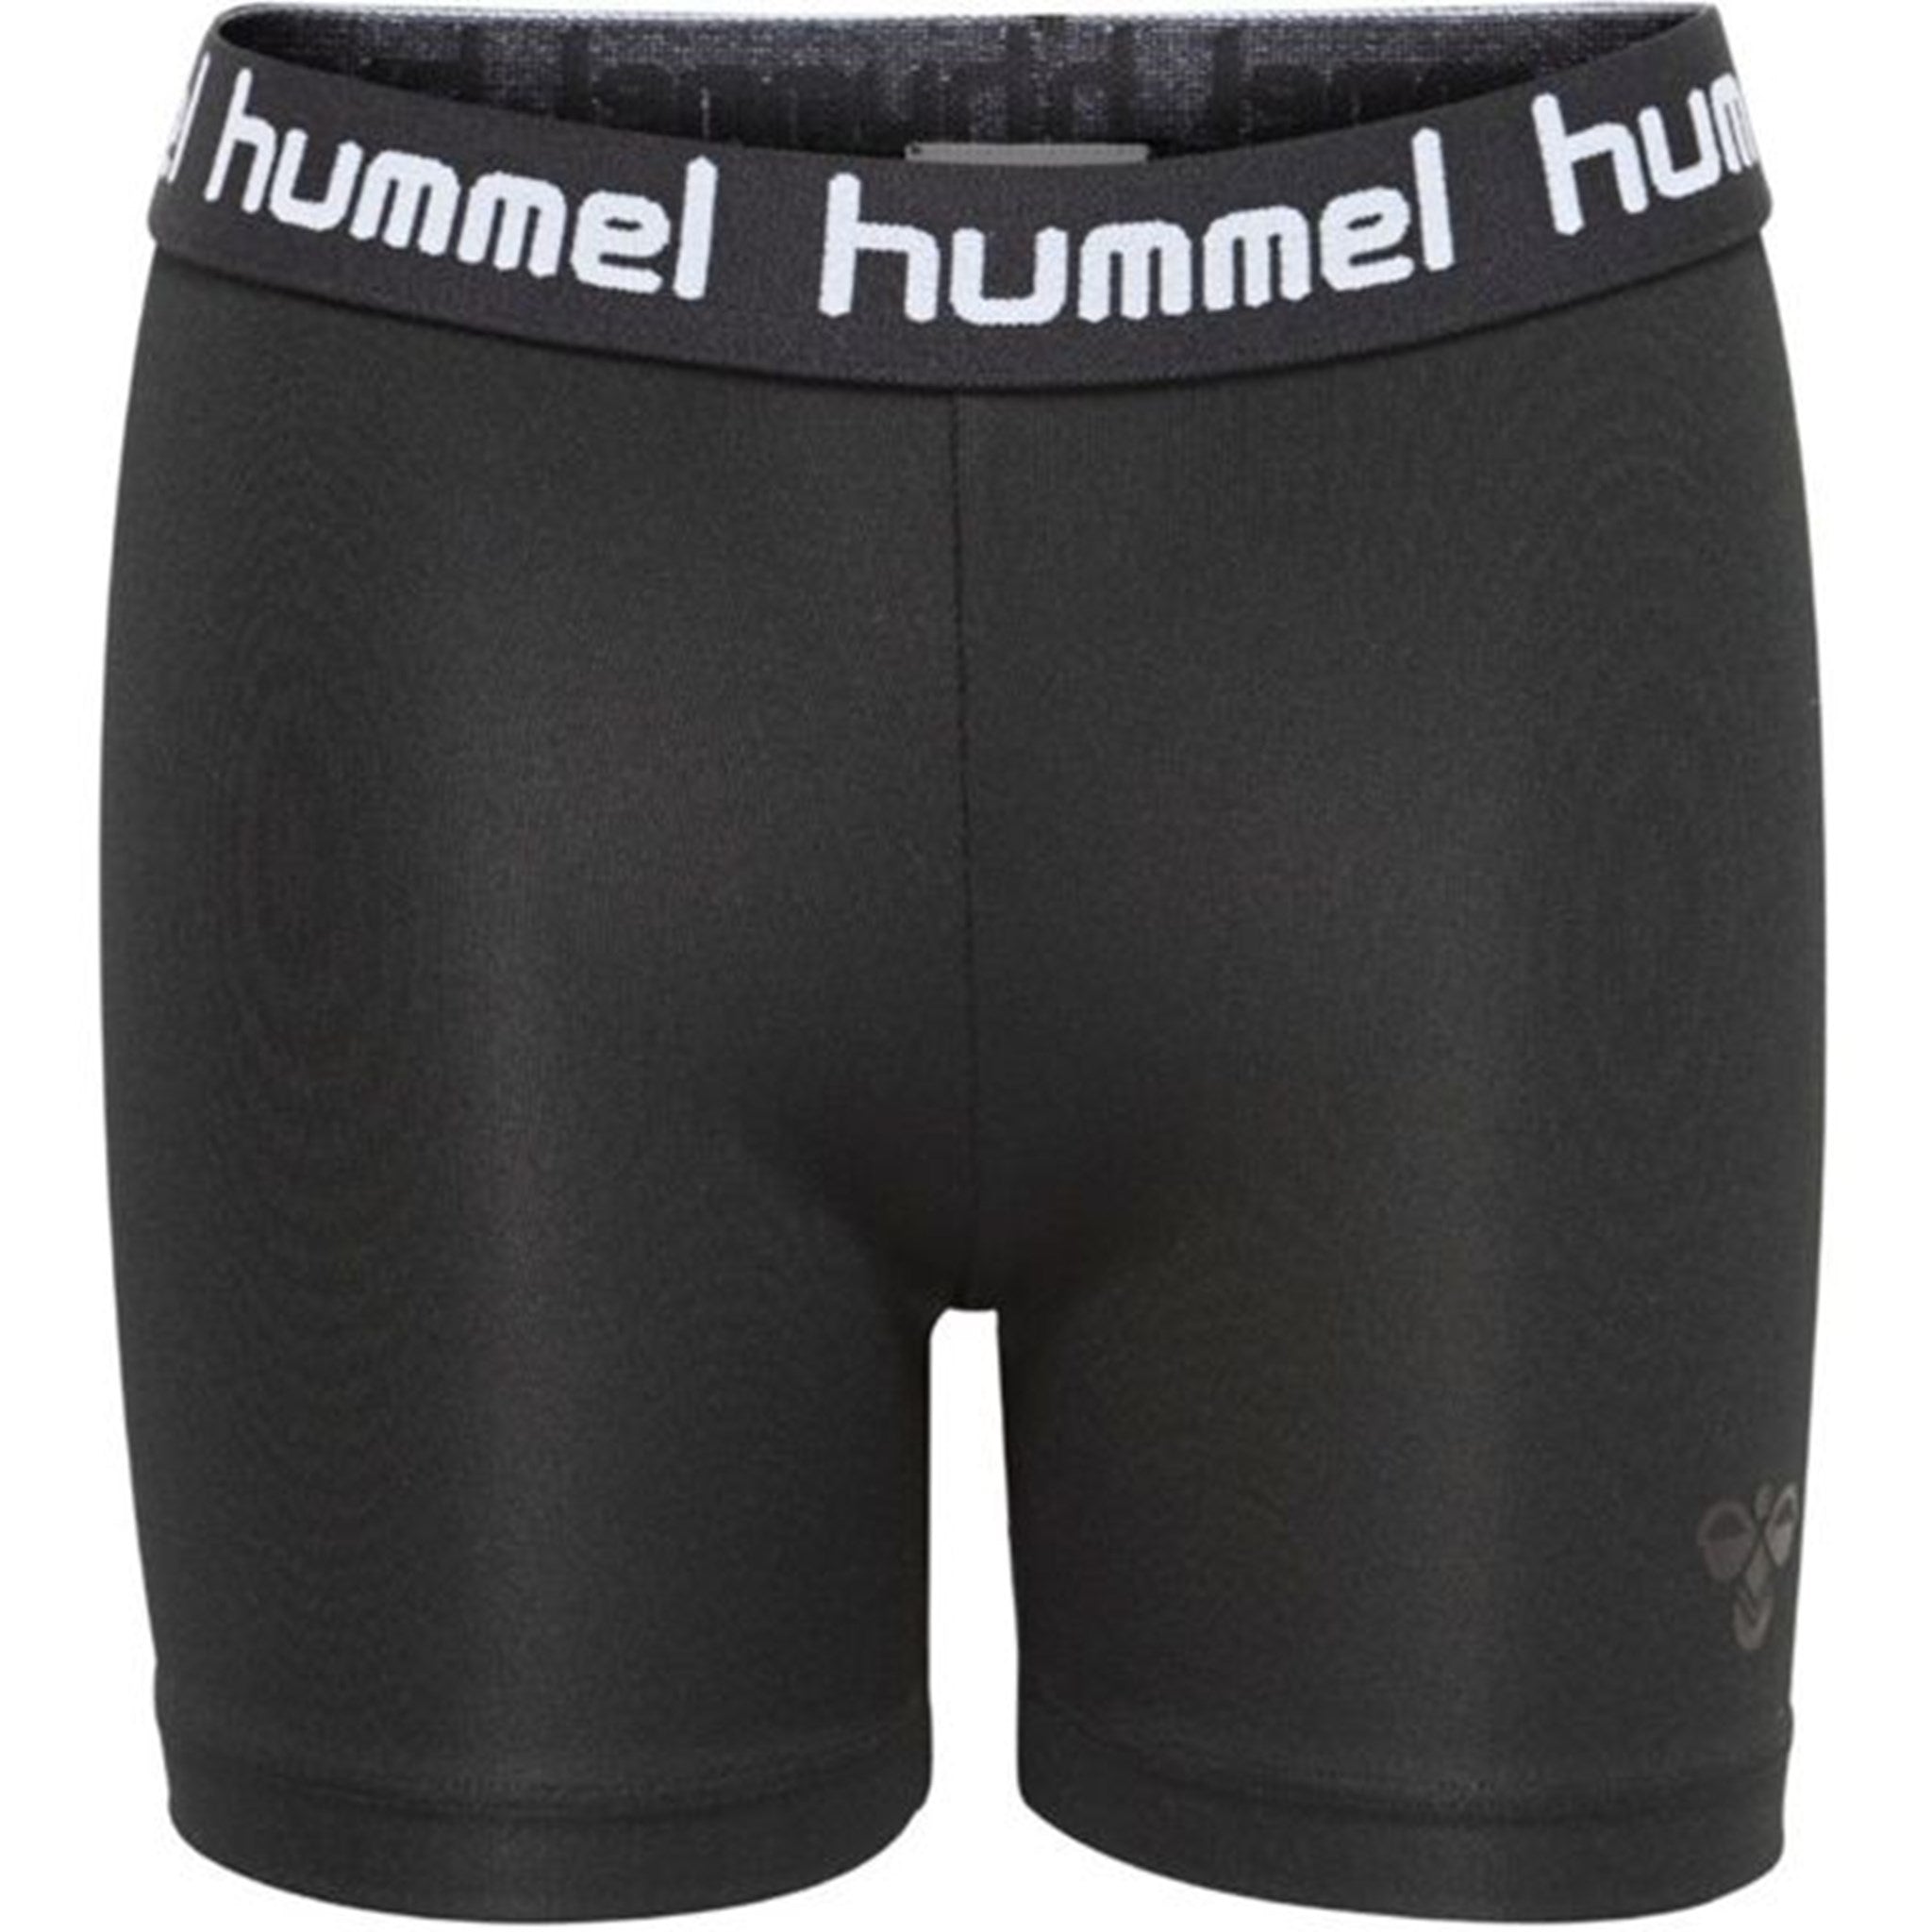 Hummel Black Tona Tight Shorts